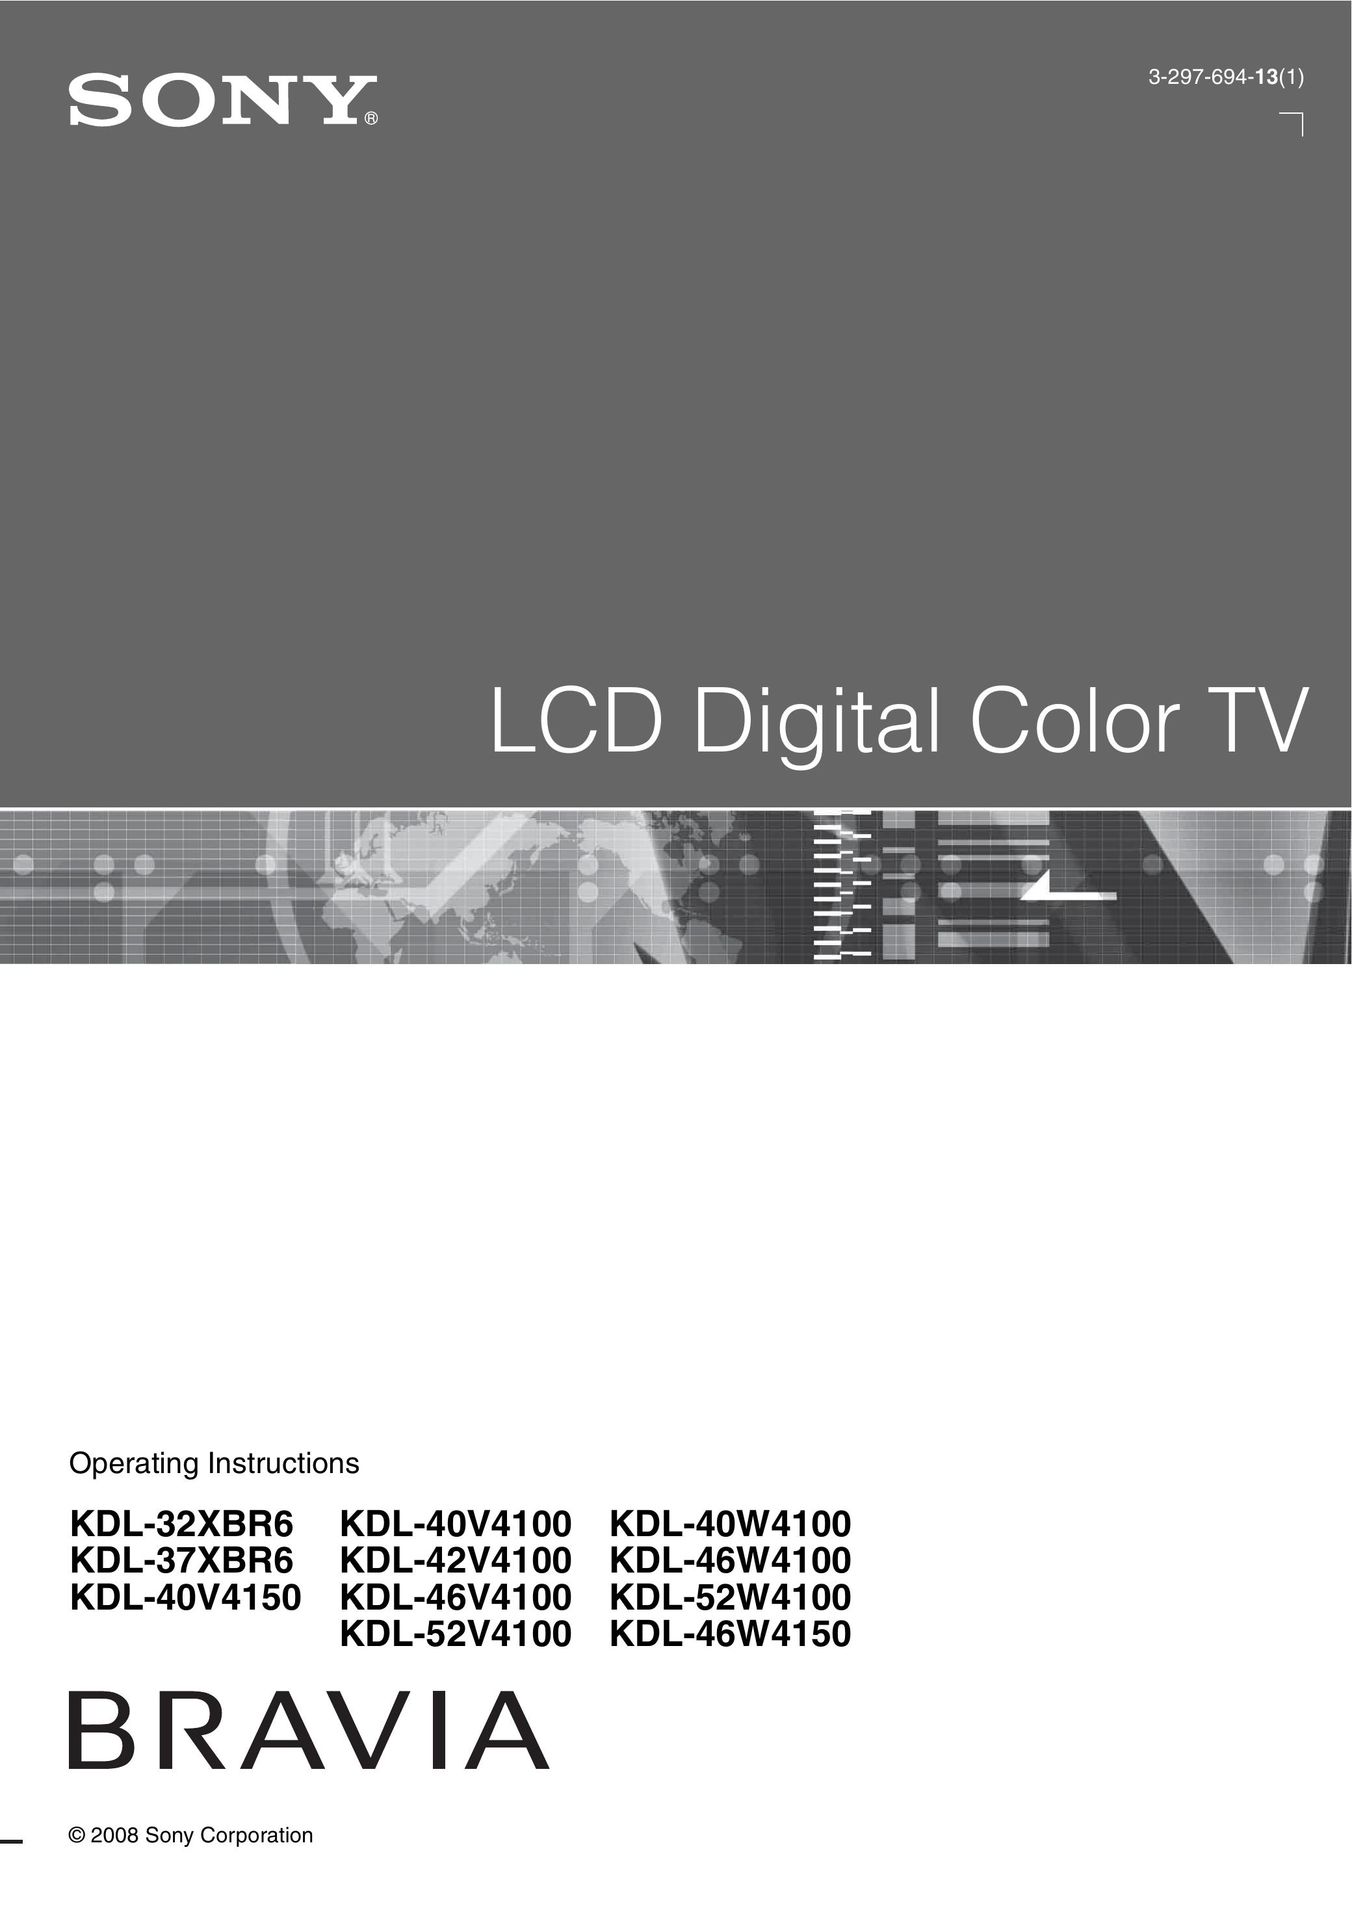 Sony KDL-52V4100 Beverage Dispenser User Manual